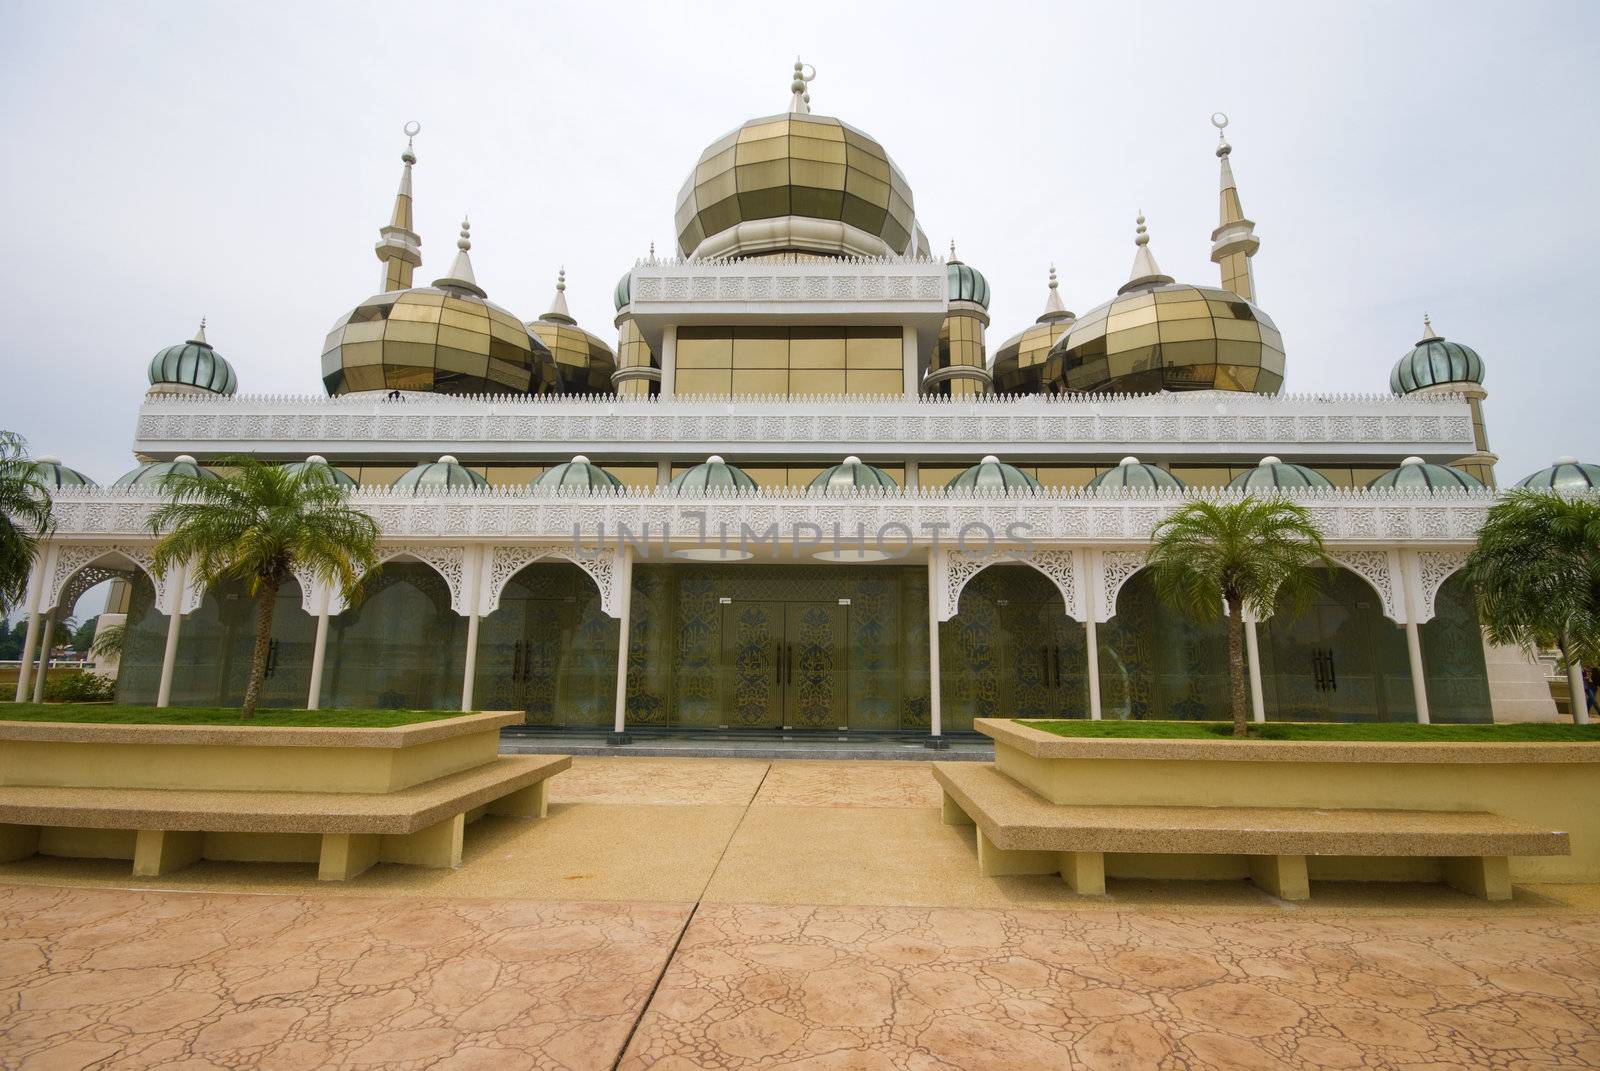 krystal mosque in terengganu, malaysia by yuliang11